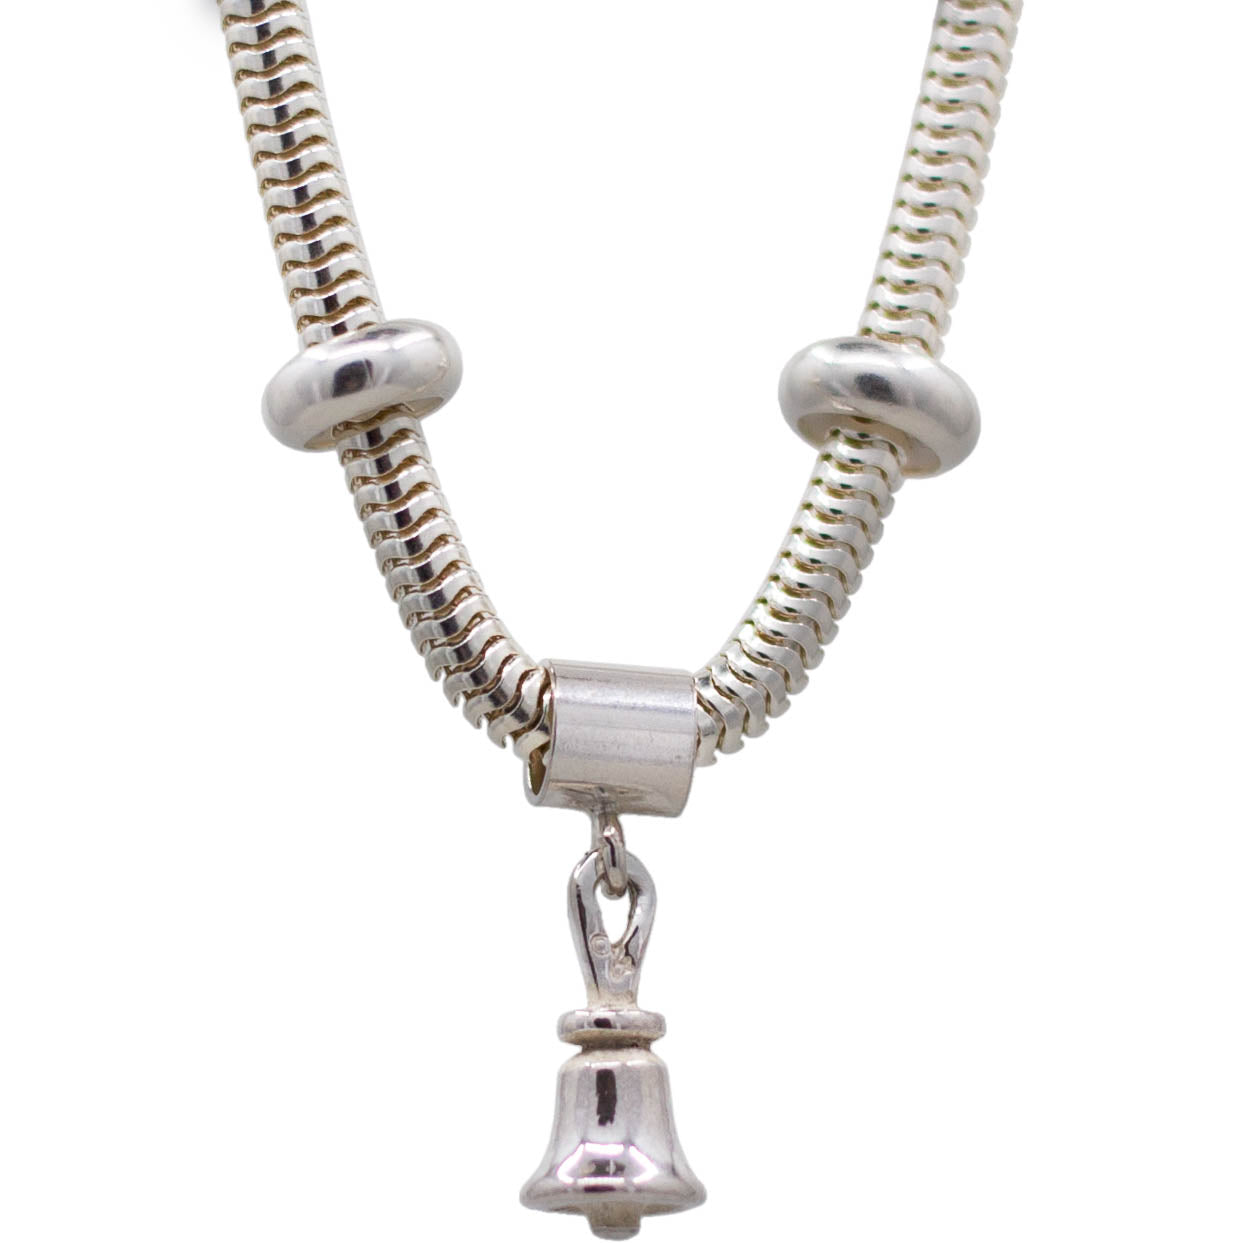 Bracelet for Charm Beads - silver